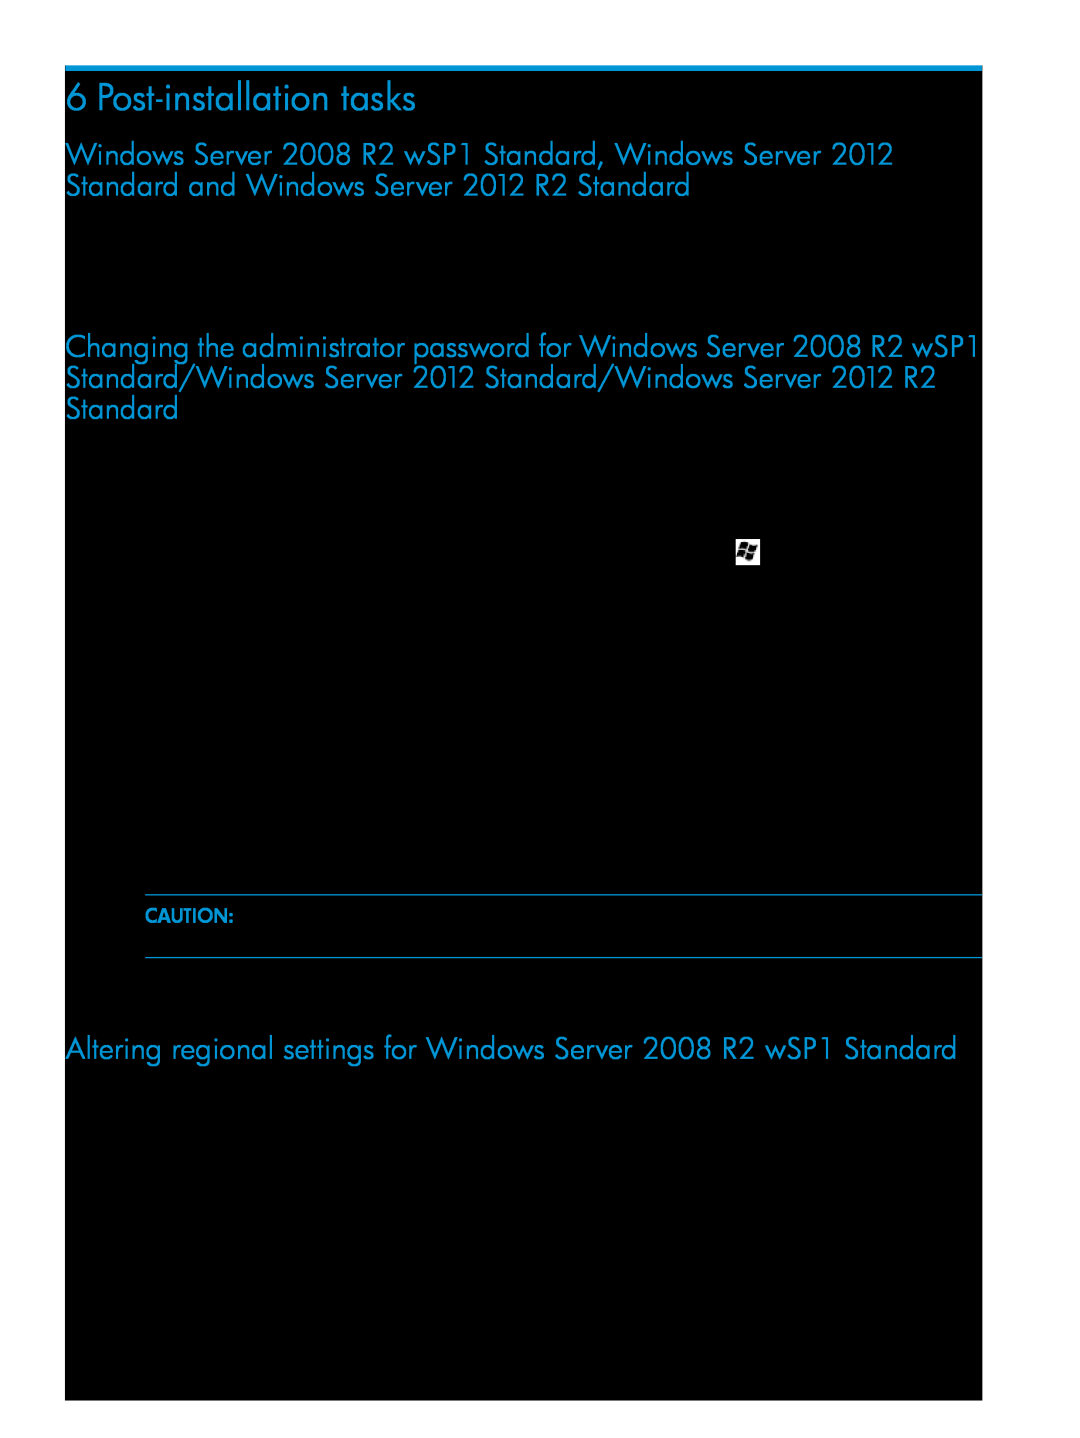 HP Microsoft Windows Server 2012 manual Post-installation tasks 